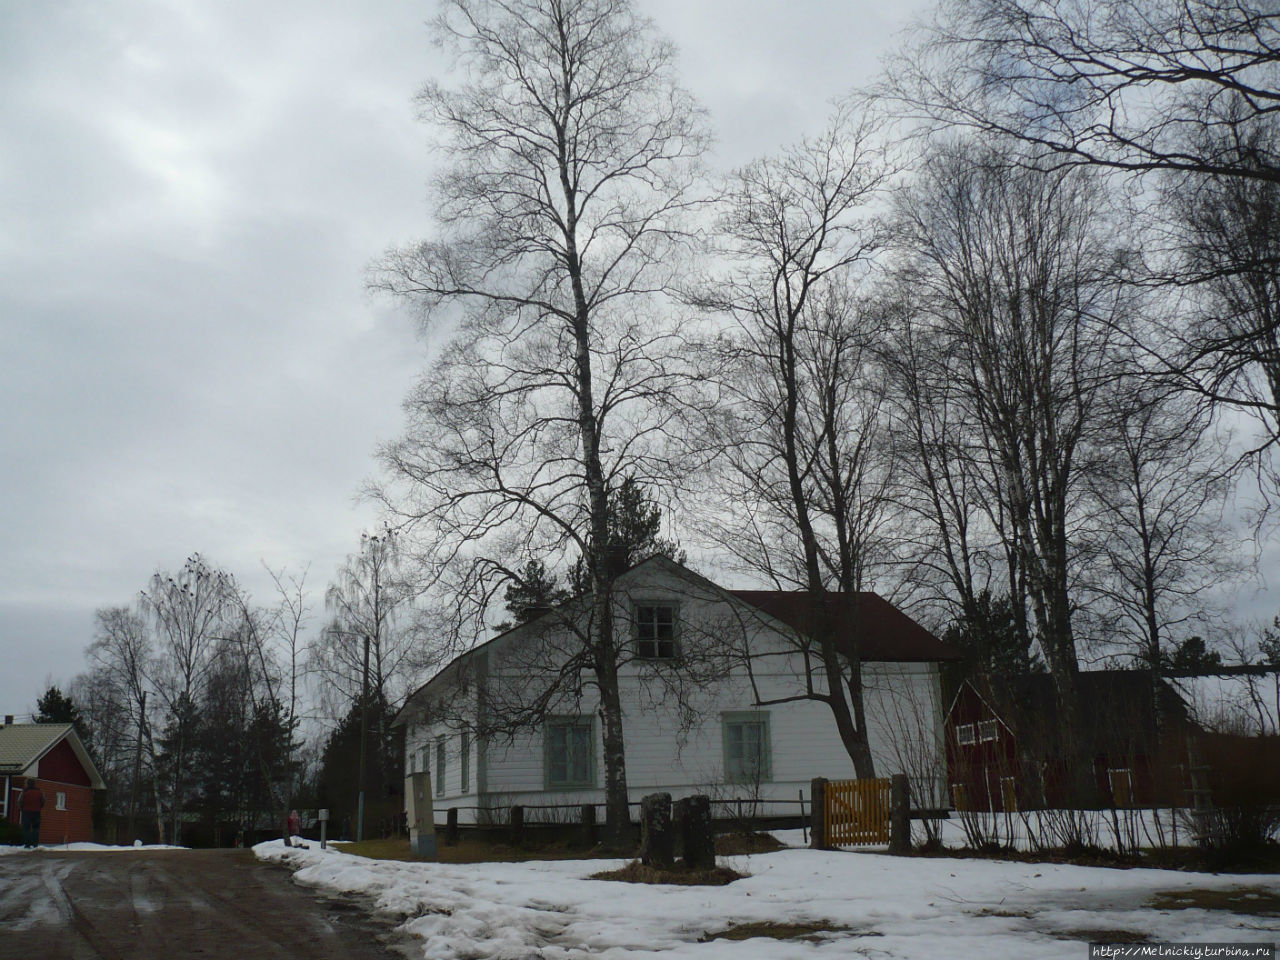 Постоялый двор «Ранта-Пукки» Аньяла, Финляндия